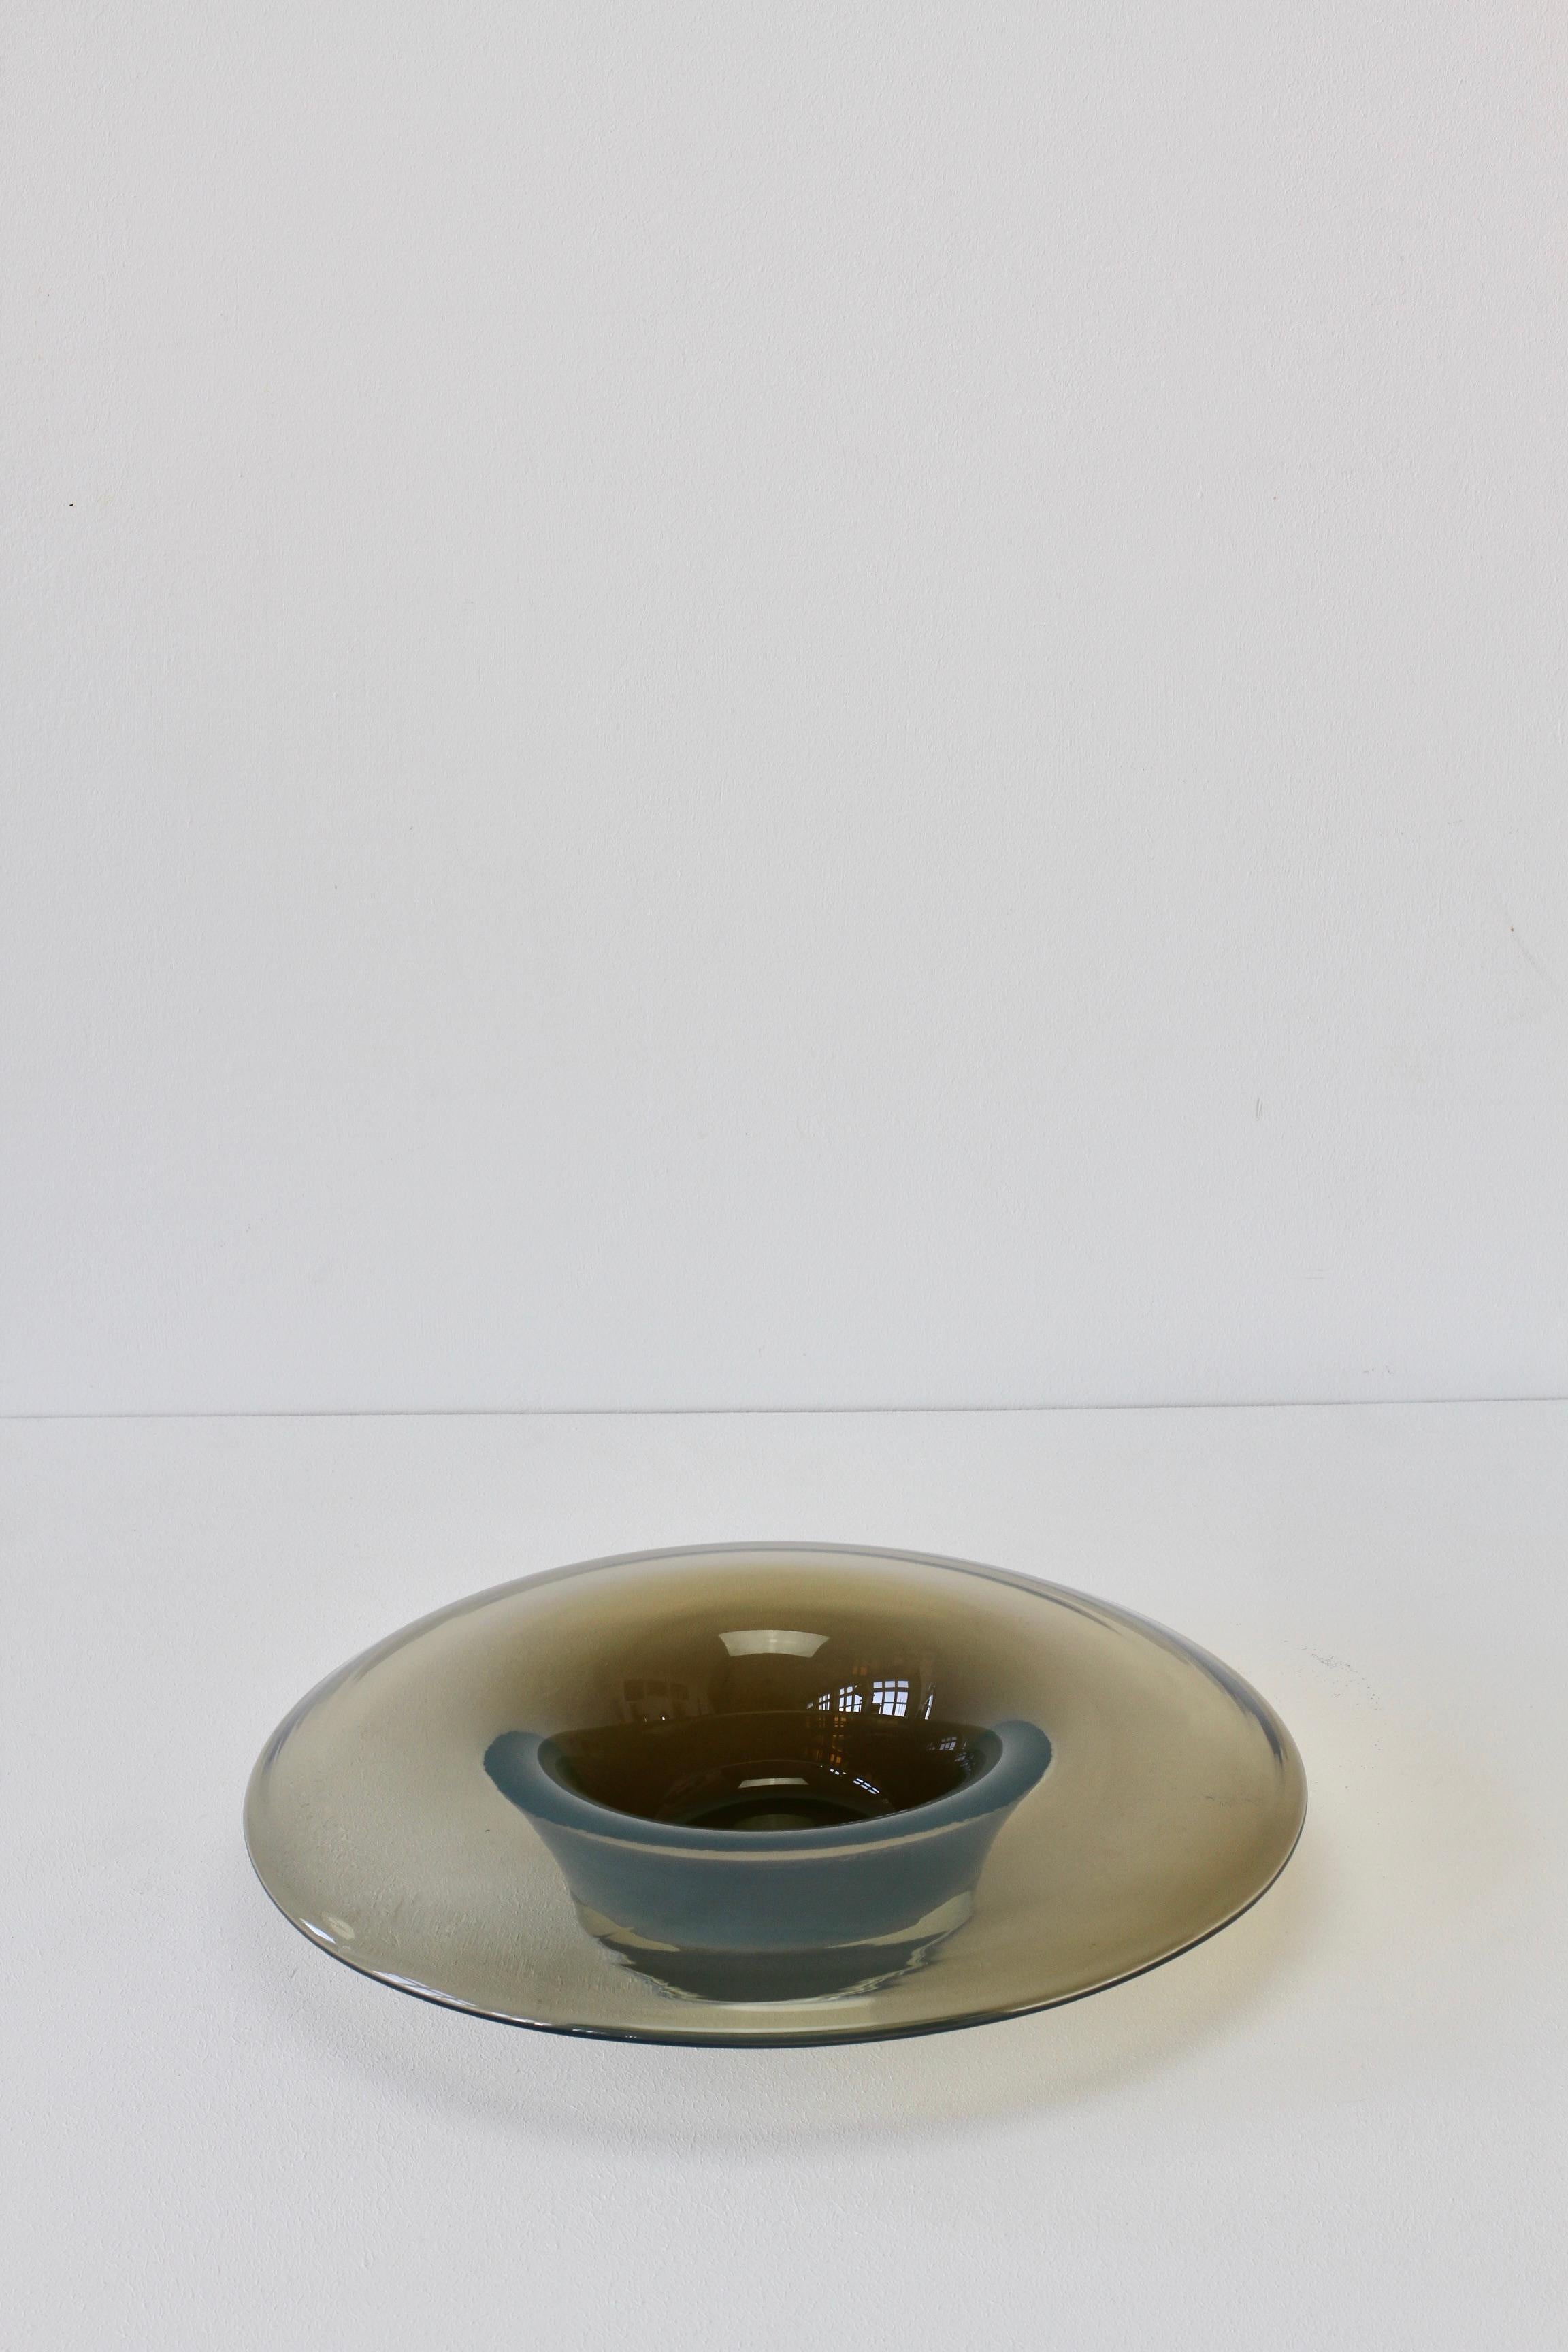 Antonio da Ros for Cenedese Vintage Italian Murano Opaline Glass Serving Bowl 1